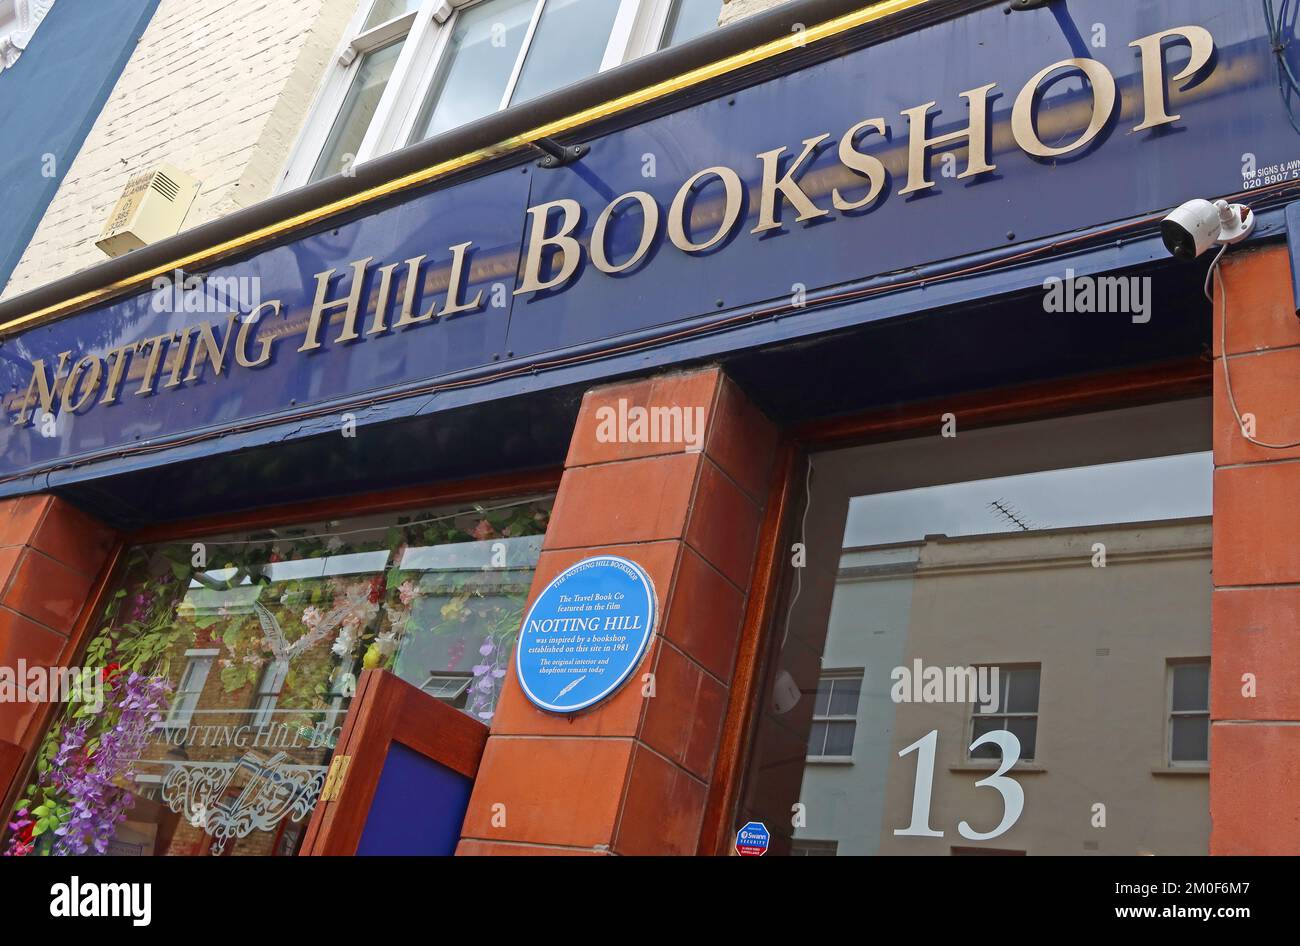 The Notting Hill Bookshop, 13 Blenheim Cres, Notting Hill, RBKC, Londres, Angleterre, Royaume-Uni, W11 2EE, du film « Notting Hill » Banque D'Images